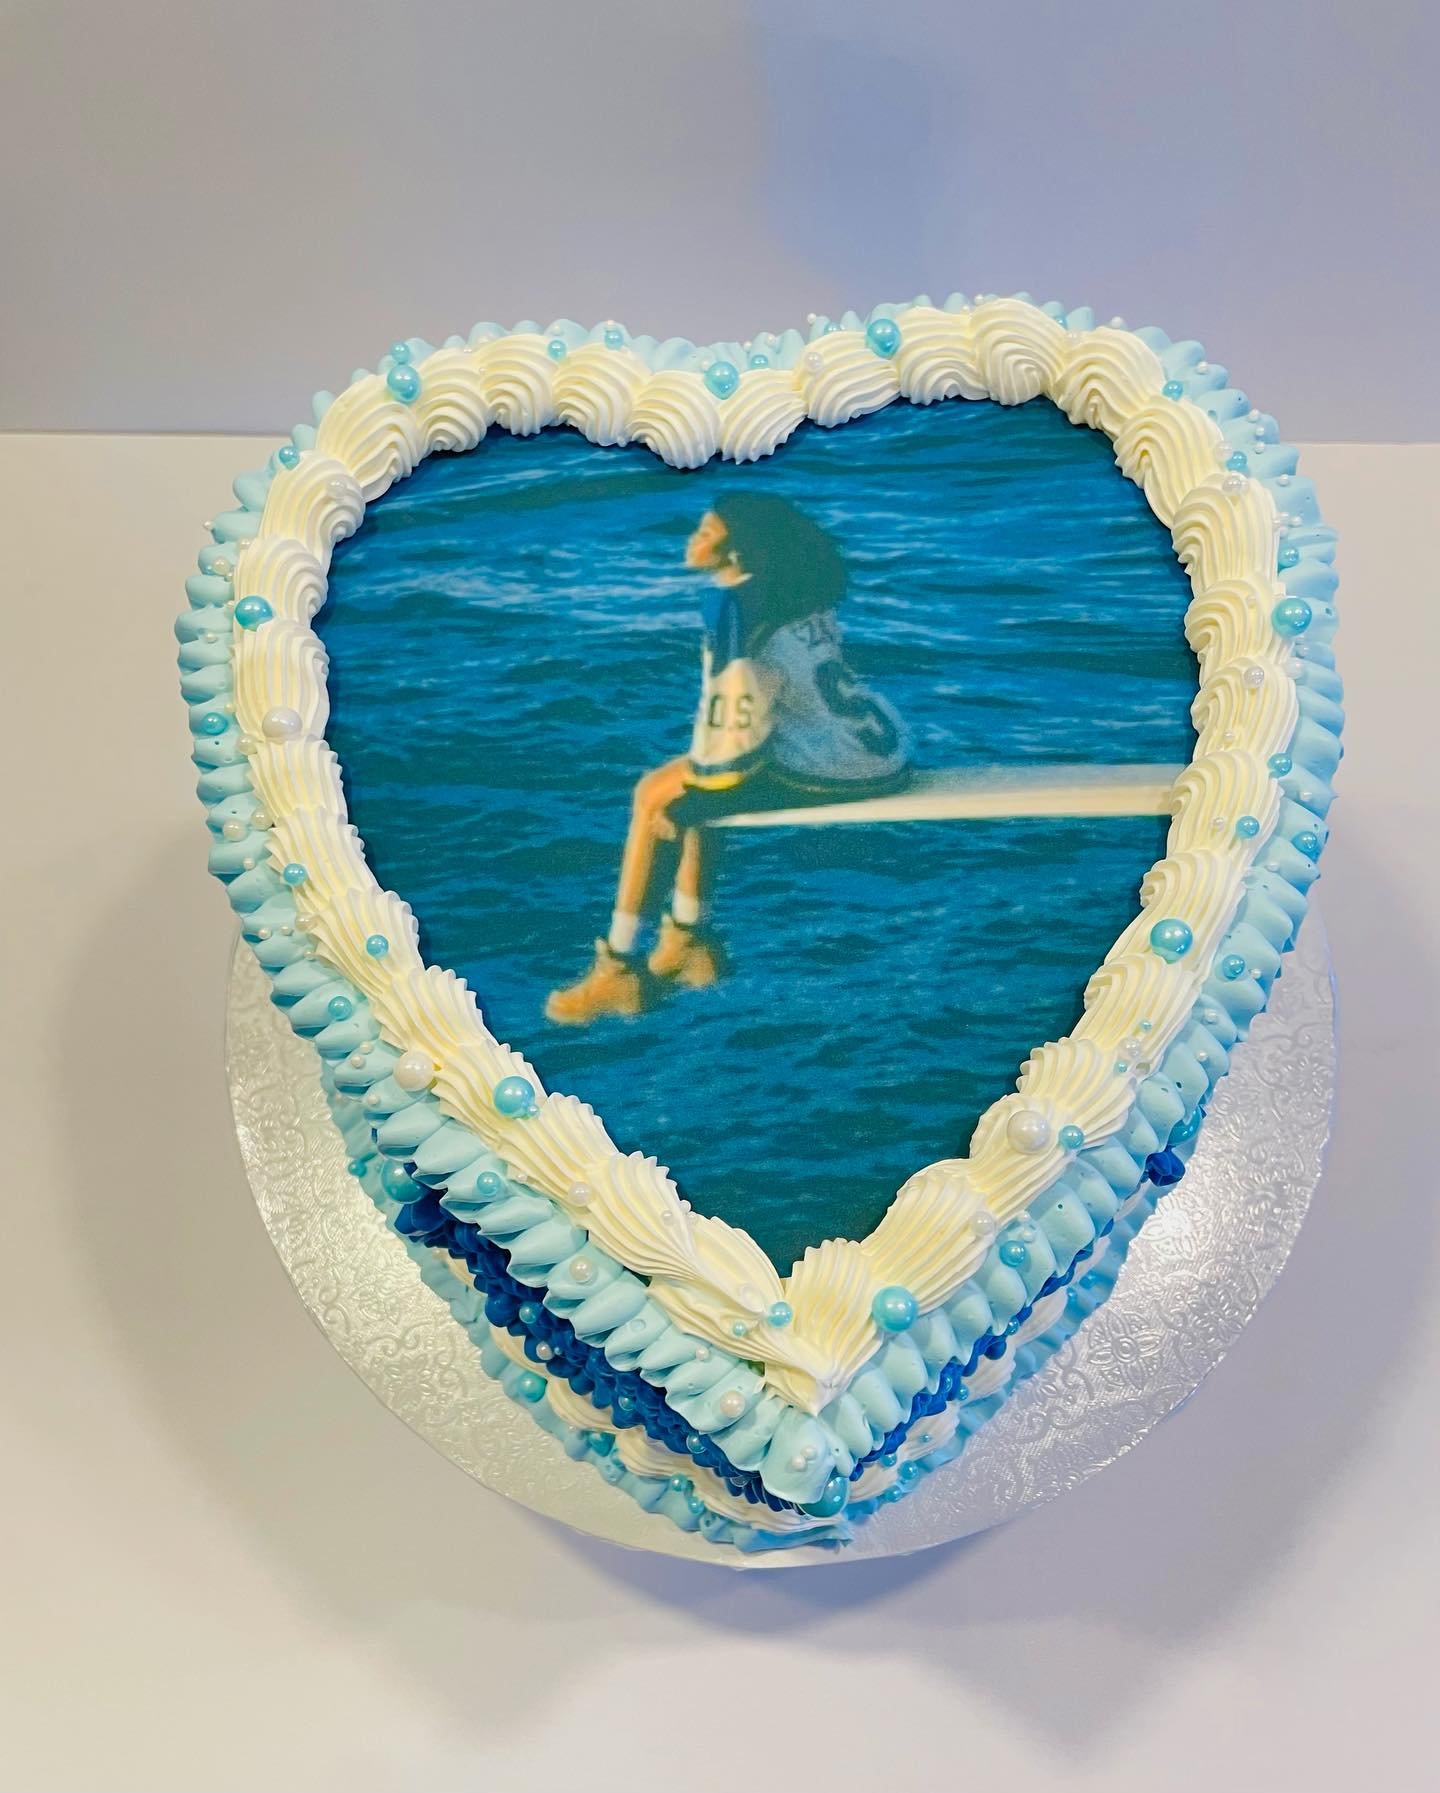 💙 birthday cake for a @sza fan!

#heartcakes #vintagecake #mamaramsaysdesserts #mamaramsay #whenyoucalljustaskformama #edibleimagecake #Moderncake #customcakesatlanta #thebakefeed #bakestagram #bakinggoals #instayum #girlcakes #ilovebaking #atlantac